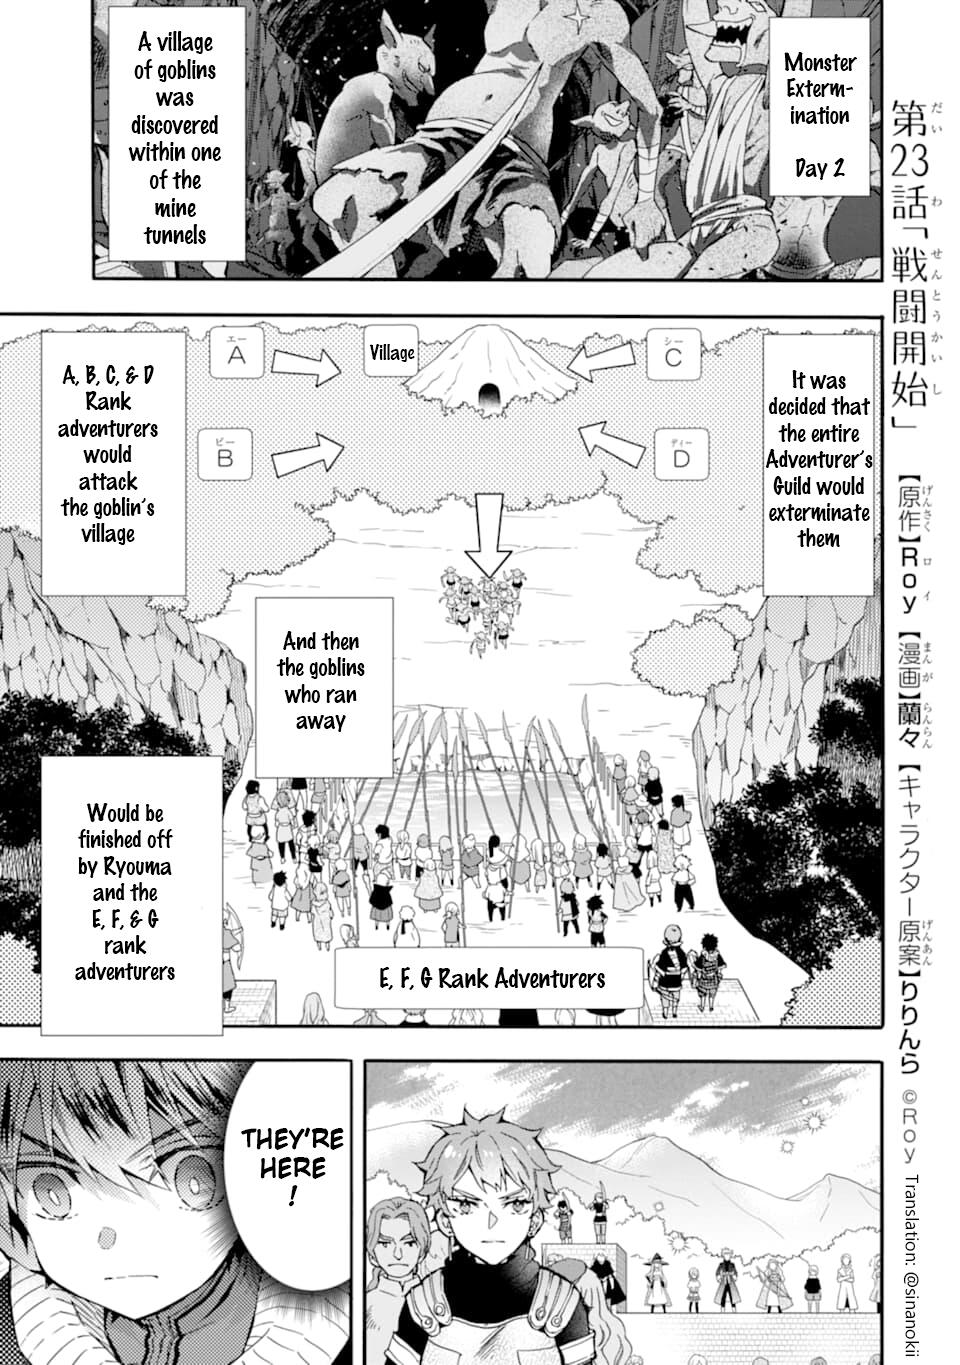 Read Kami-tachi ni Hirowareta Otoko Manga Chapter 34 in English